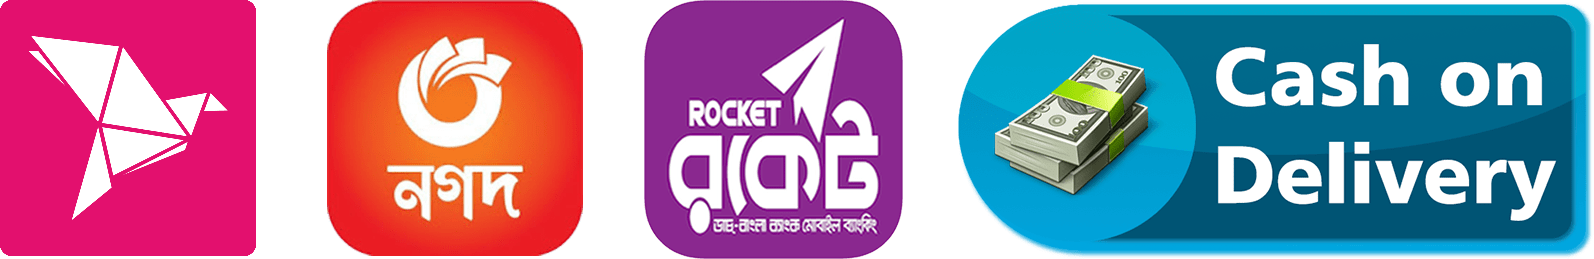 bkash-nagad-rocket-1